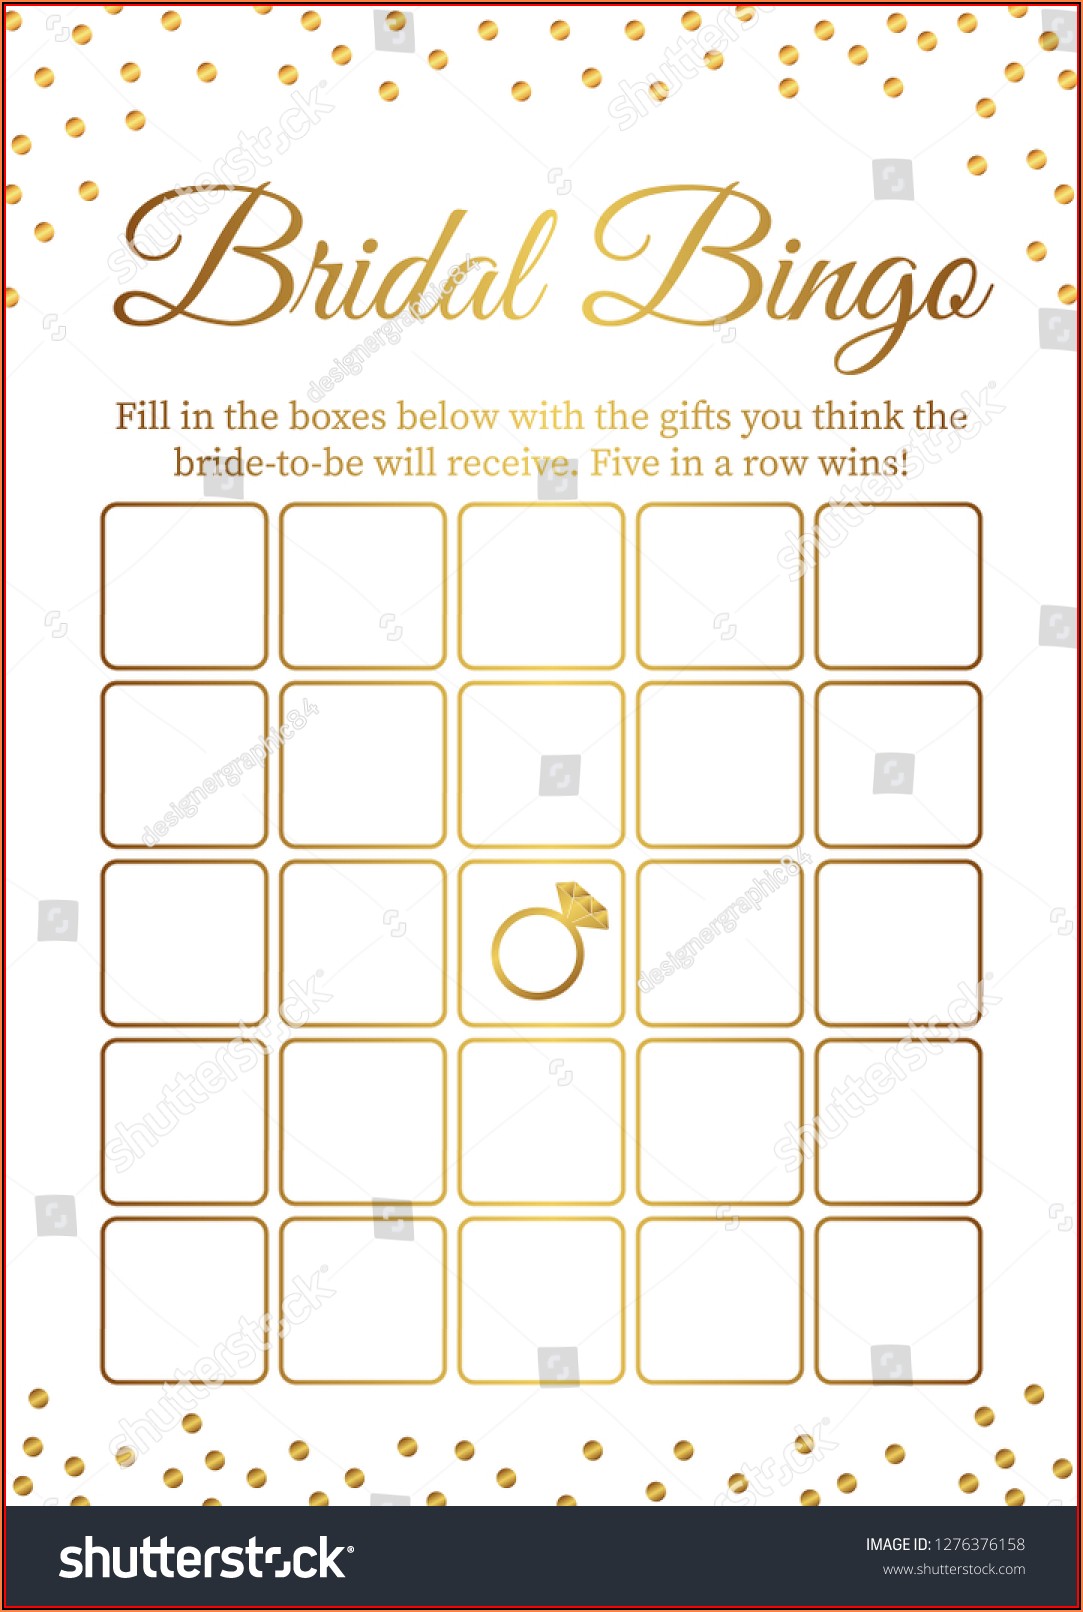 Bridal Shower Bingo Template Free